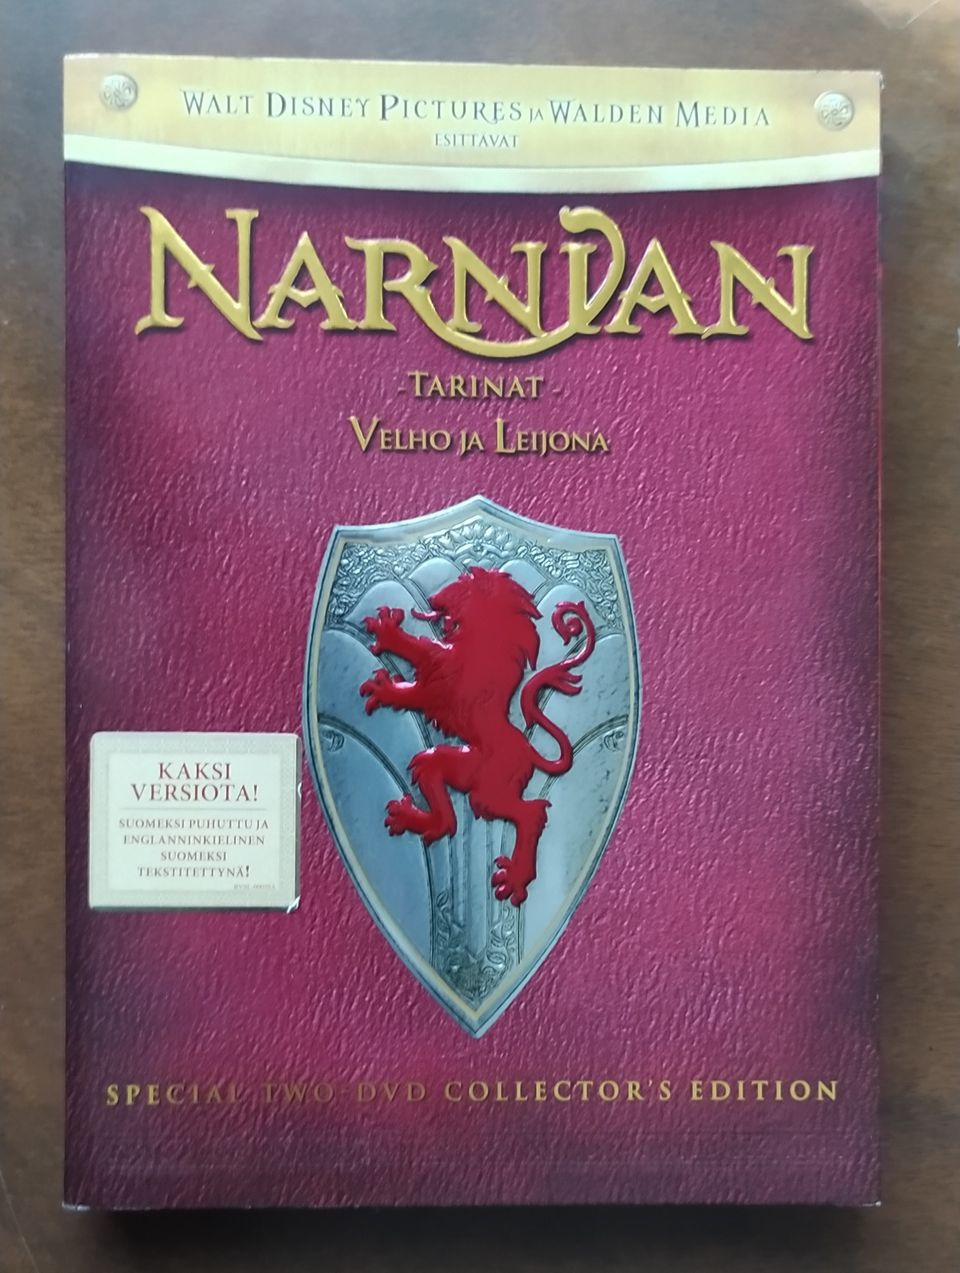 Narnian tarinat - Velho ja leijona Special Two-DVD Collector's Edition